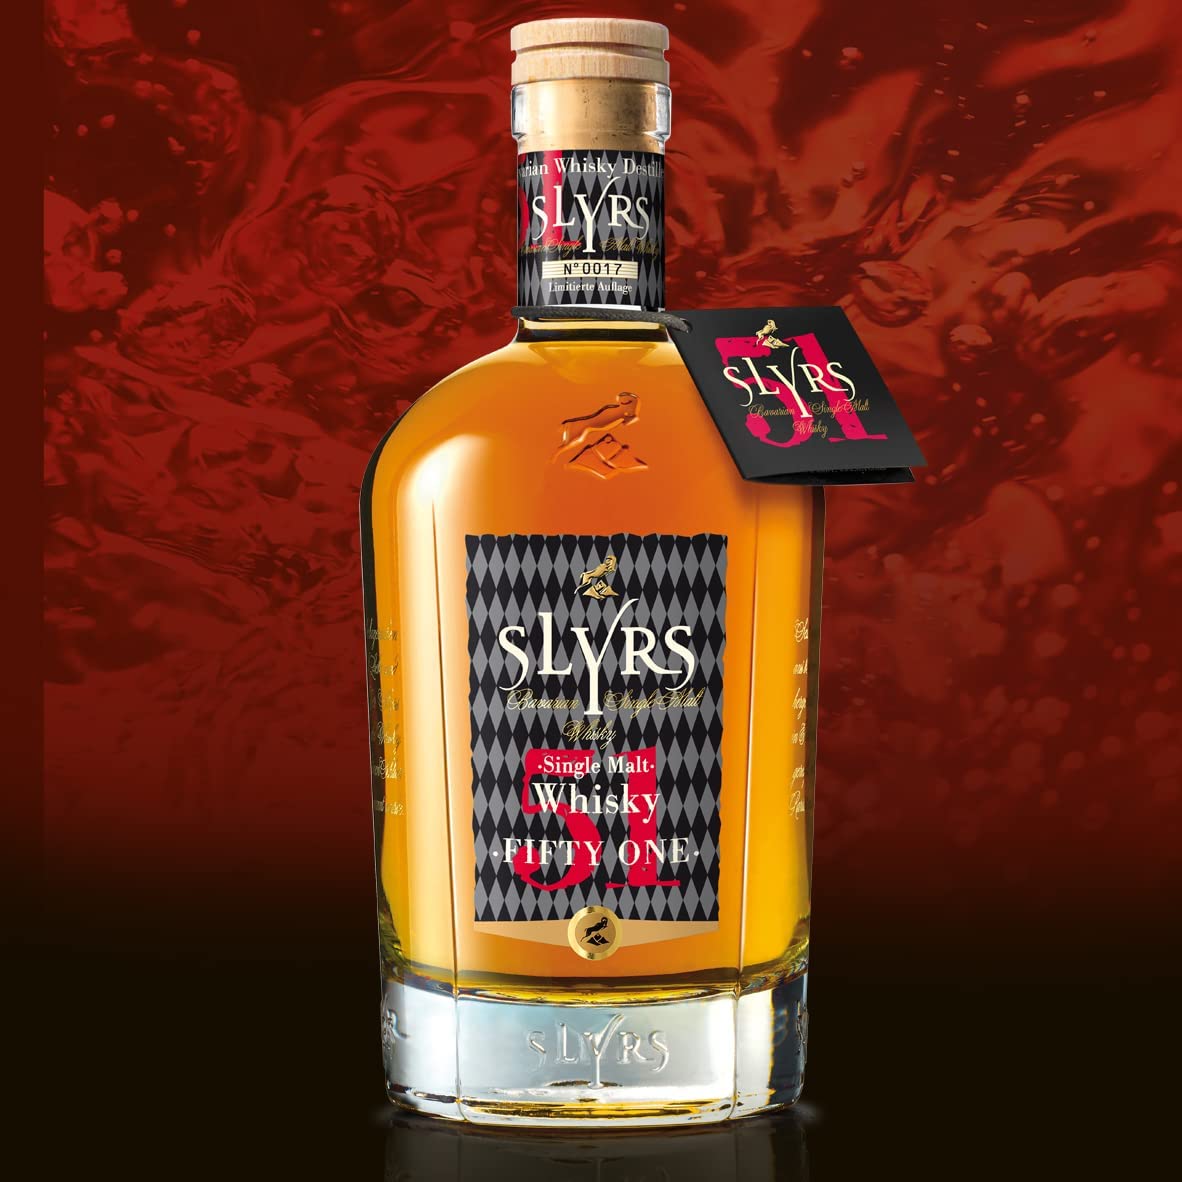 One Bavarian My Life – Whisky Malt Slyrs Whisky vol. Fifty 51% Single –